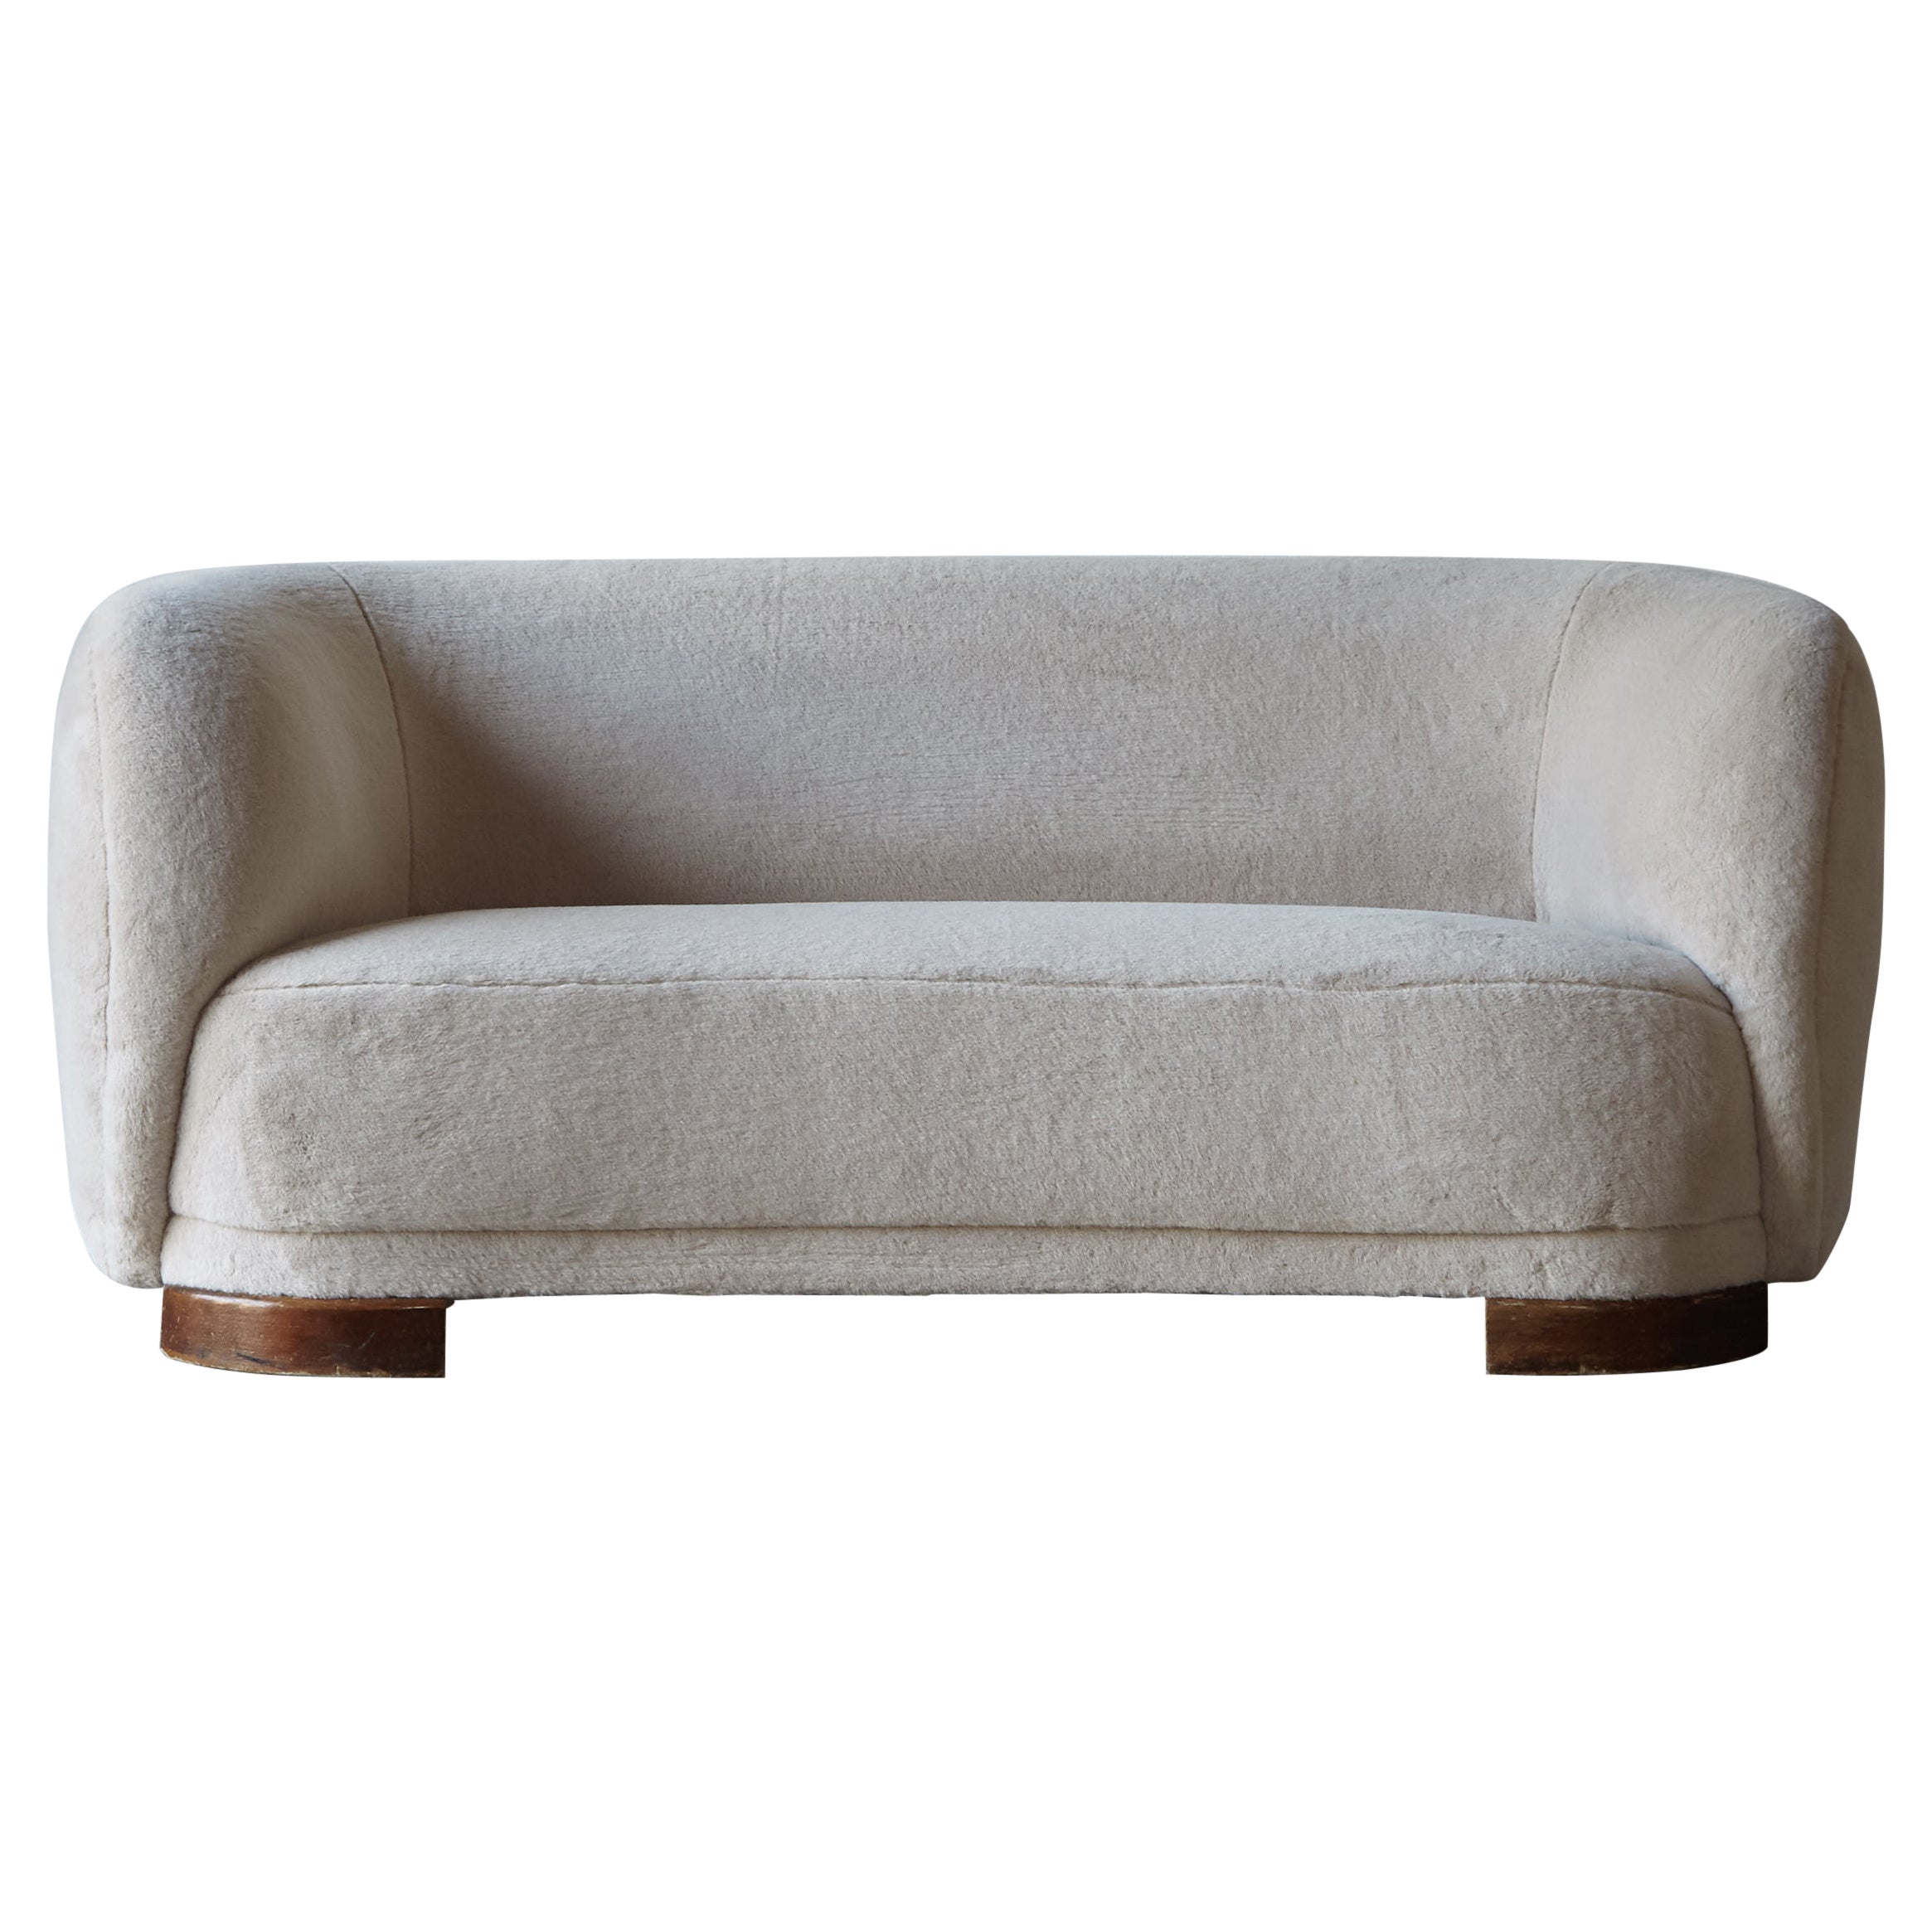 1940s Danish Cabinetmaker Sofa, Newly Upholstered in Alpaca